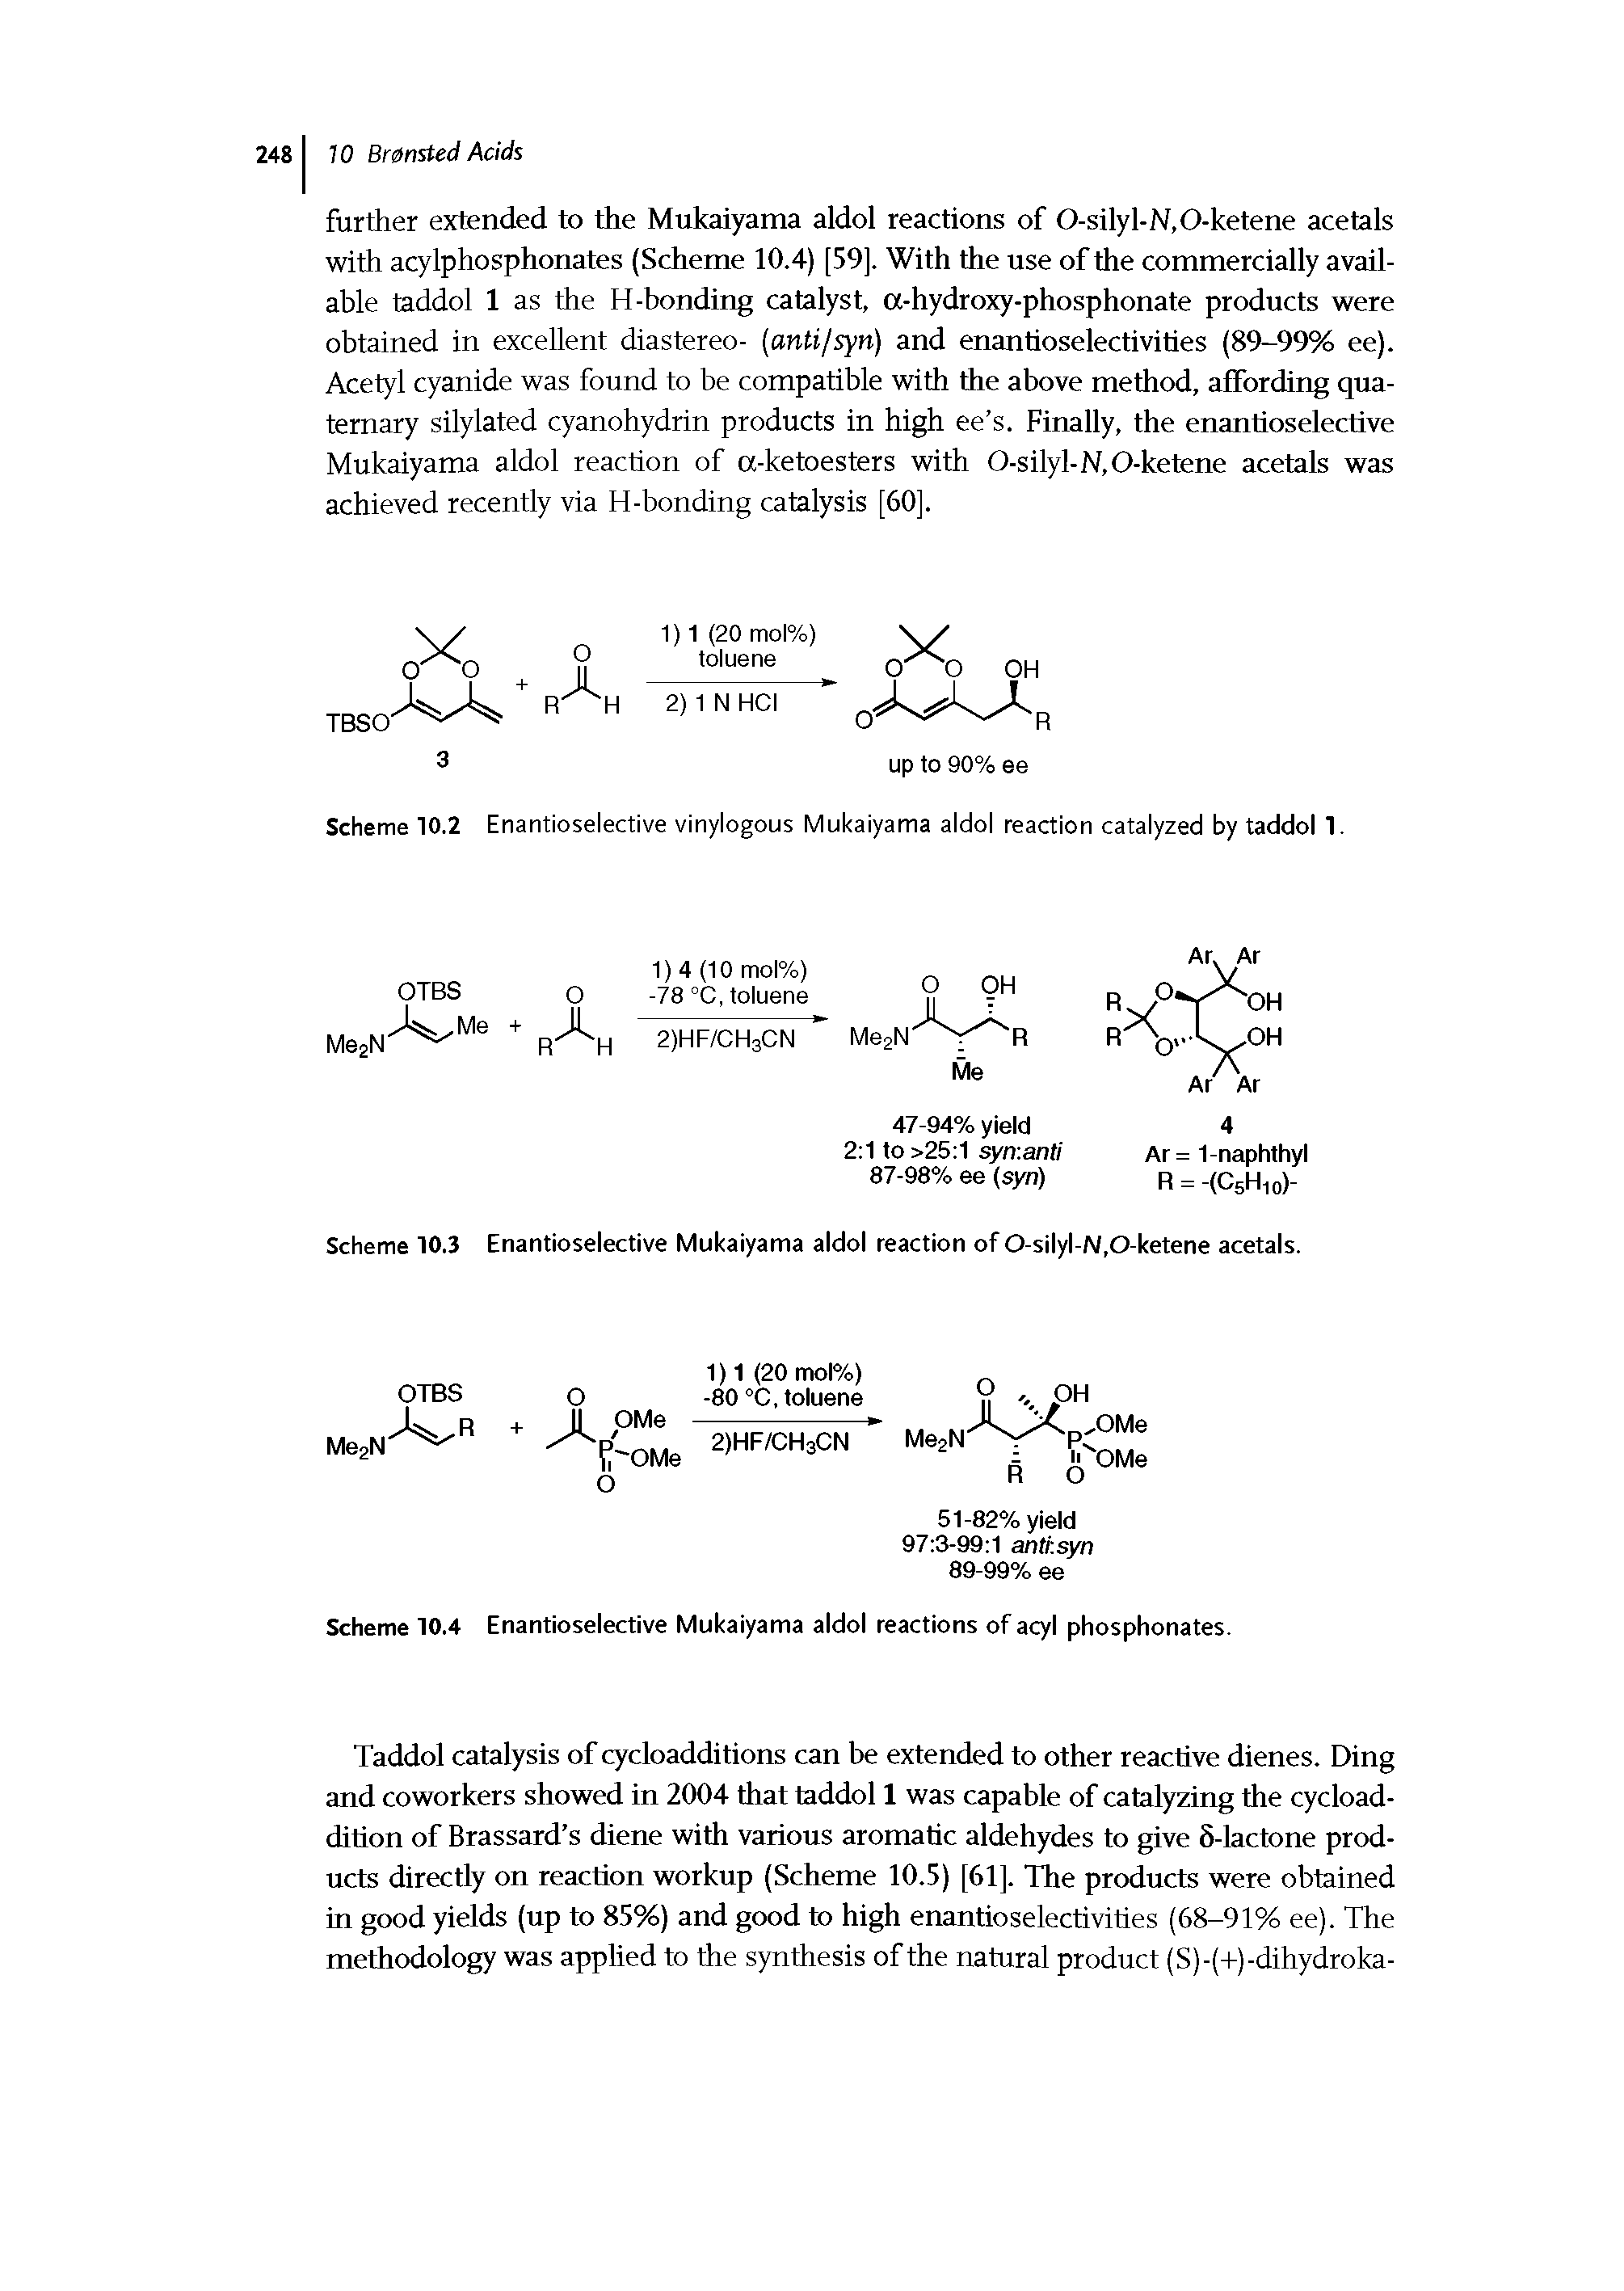 Scheme 10.3 Enantioselective Mukaiyama aldol reaction of 0-silyl-N,0-ketene acetals.